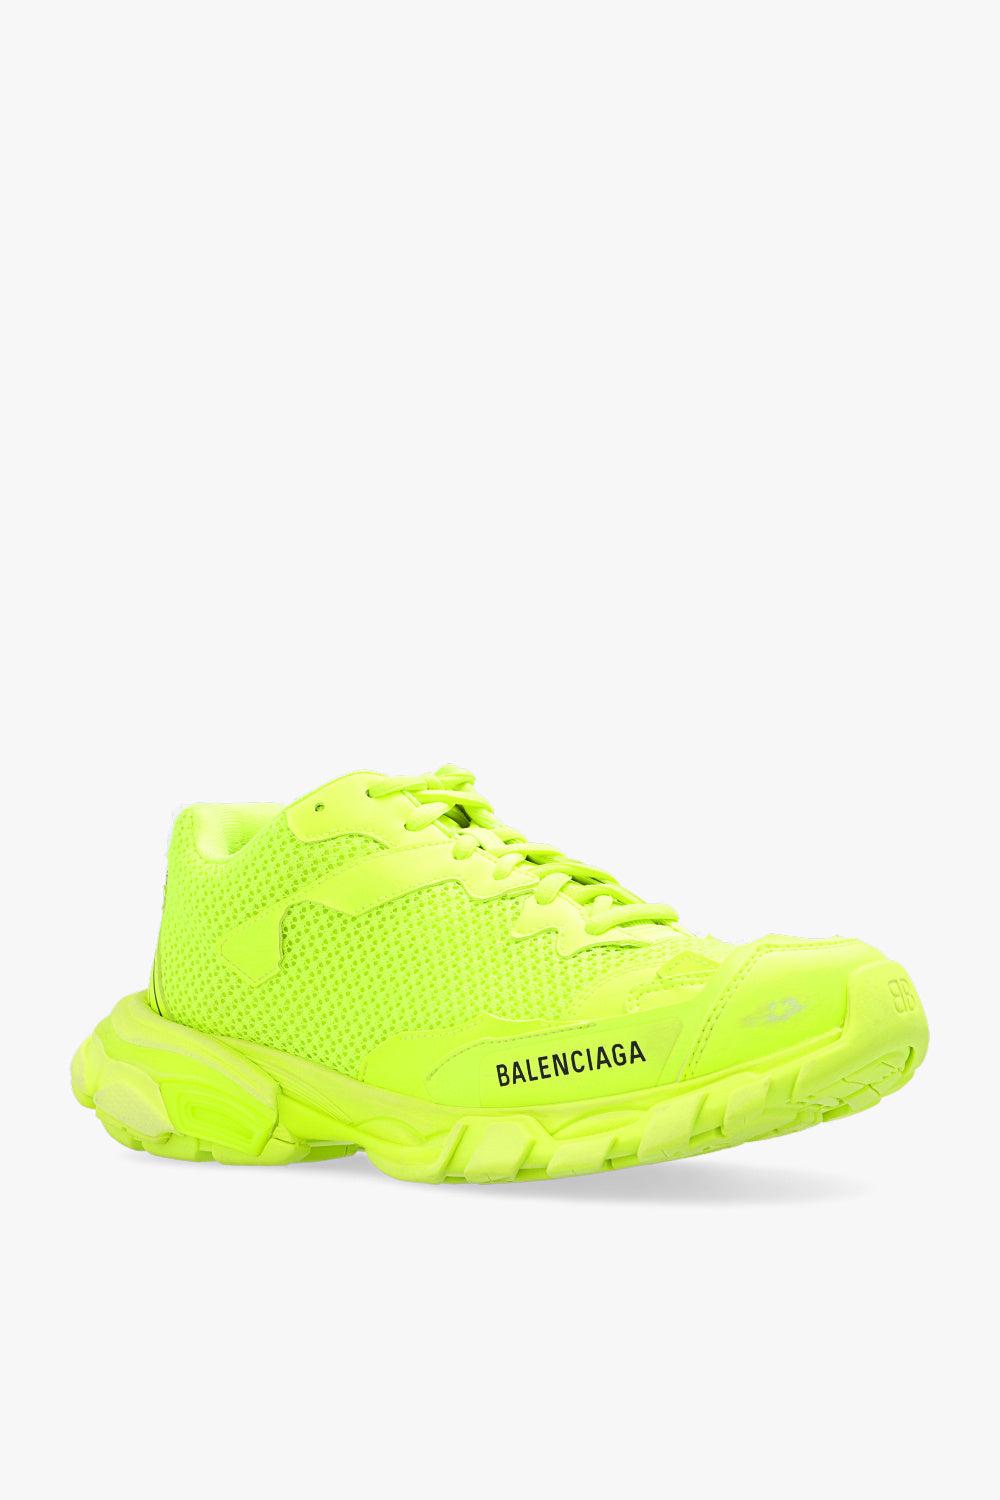 Balenciaga Multicolor Leather and Mesh Triple S Sneakers Size 38 Balenciaga